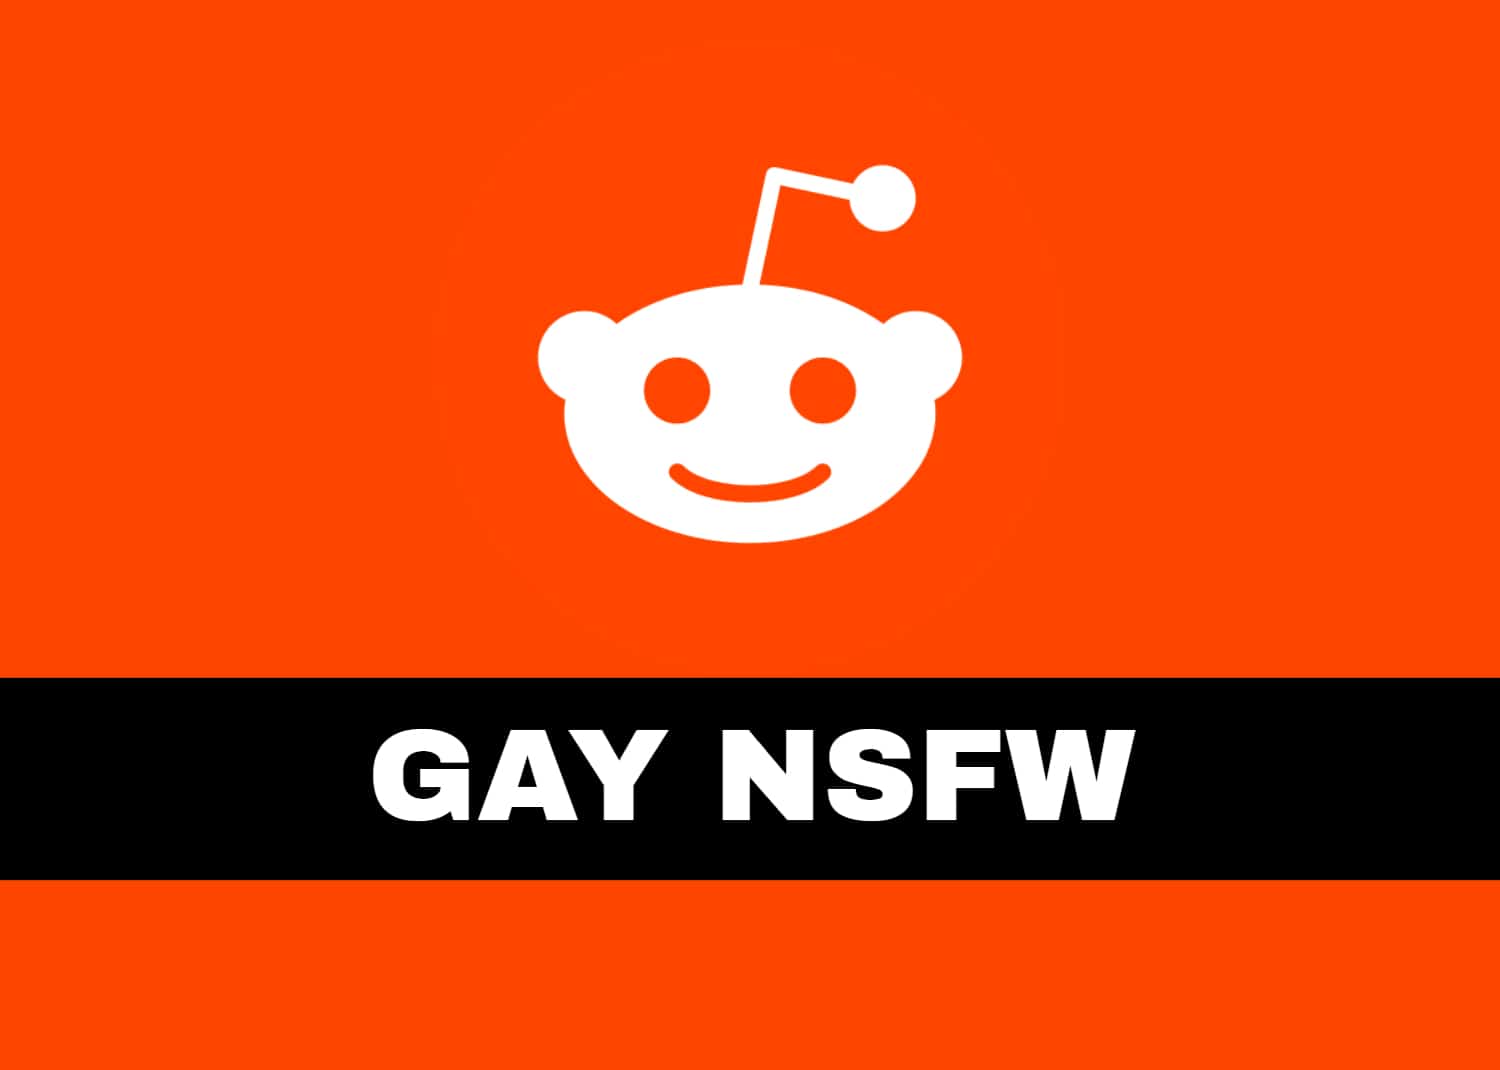 Reddit gay porn: Gay NSFW